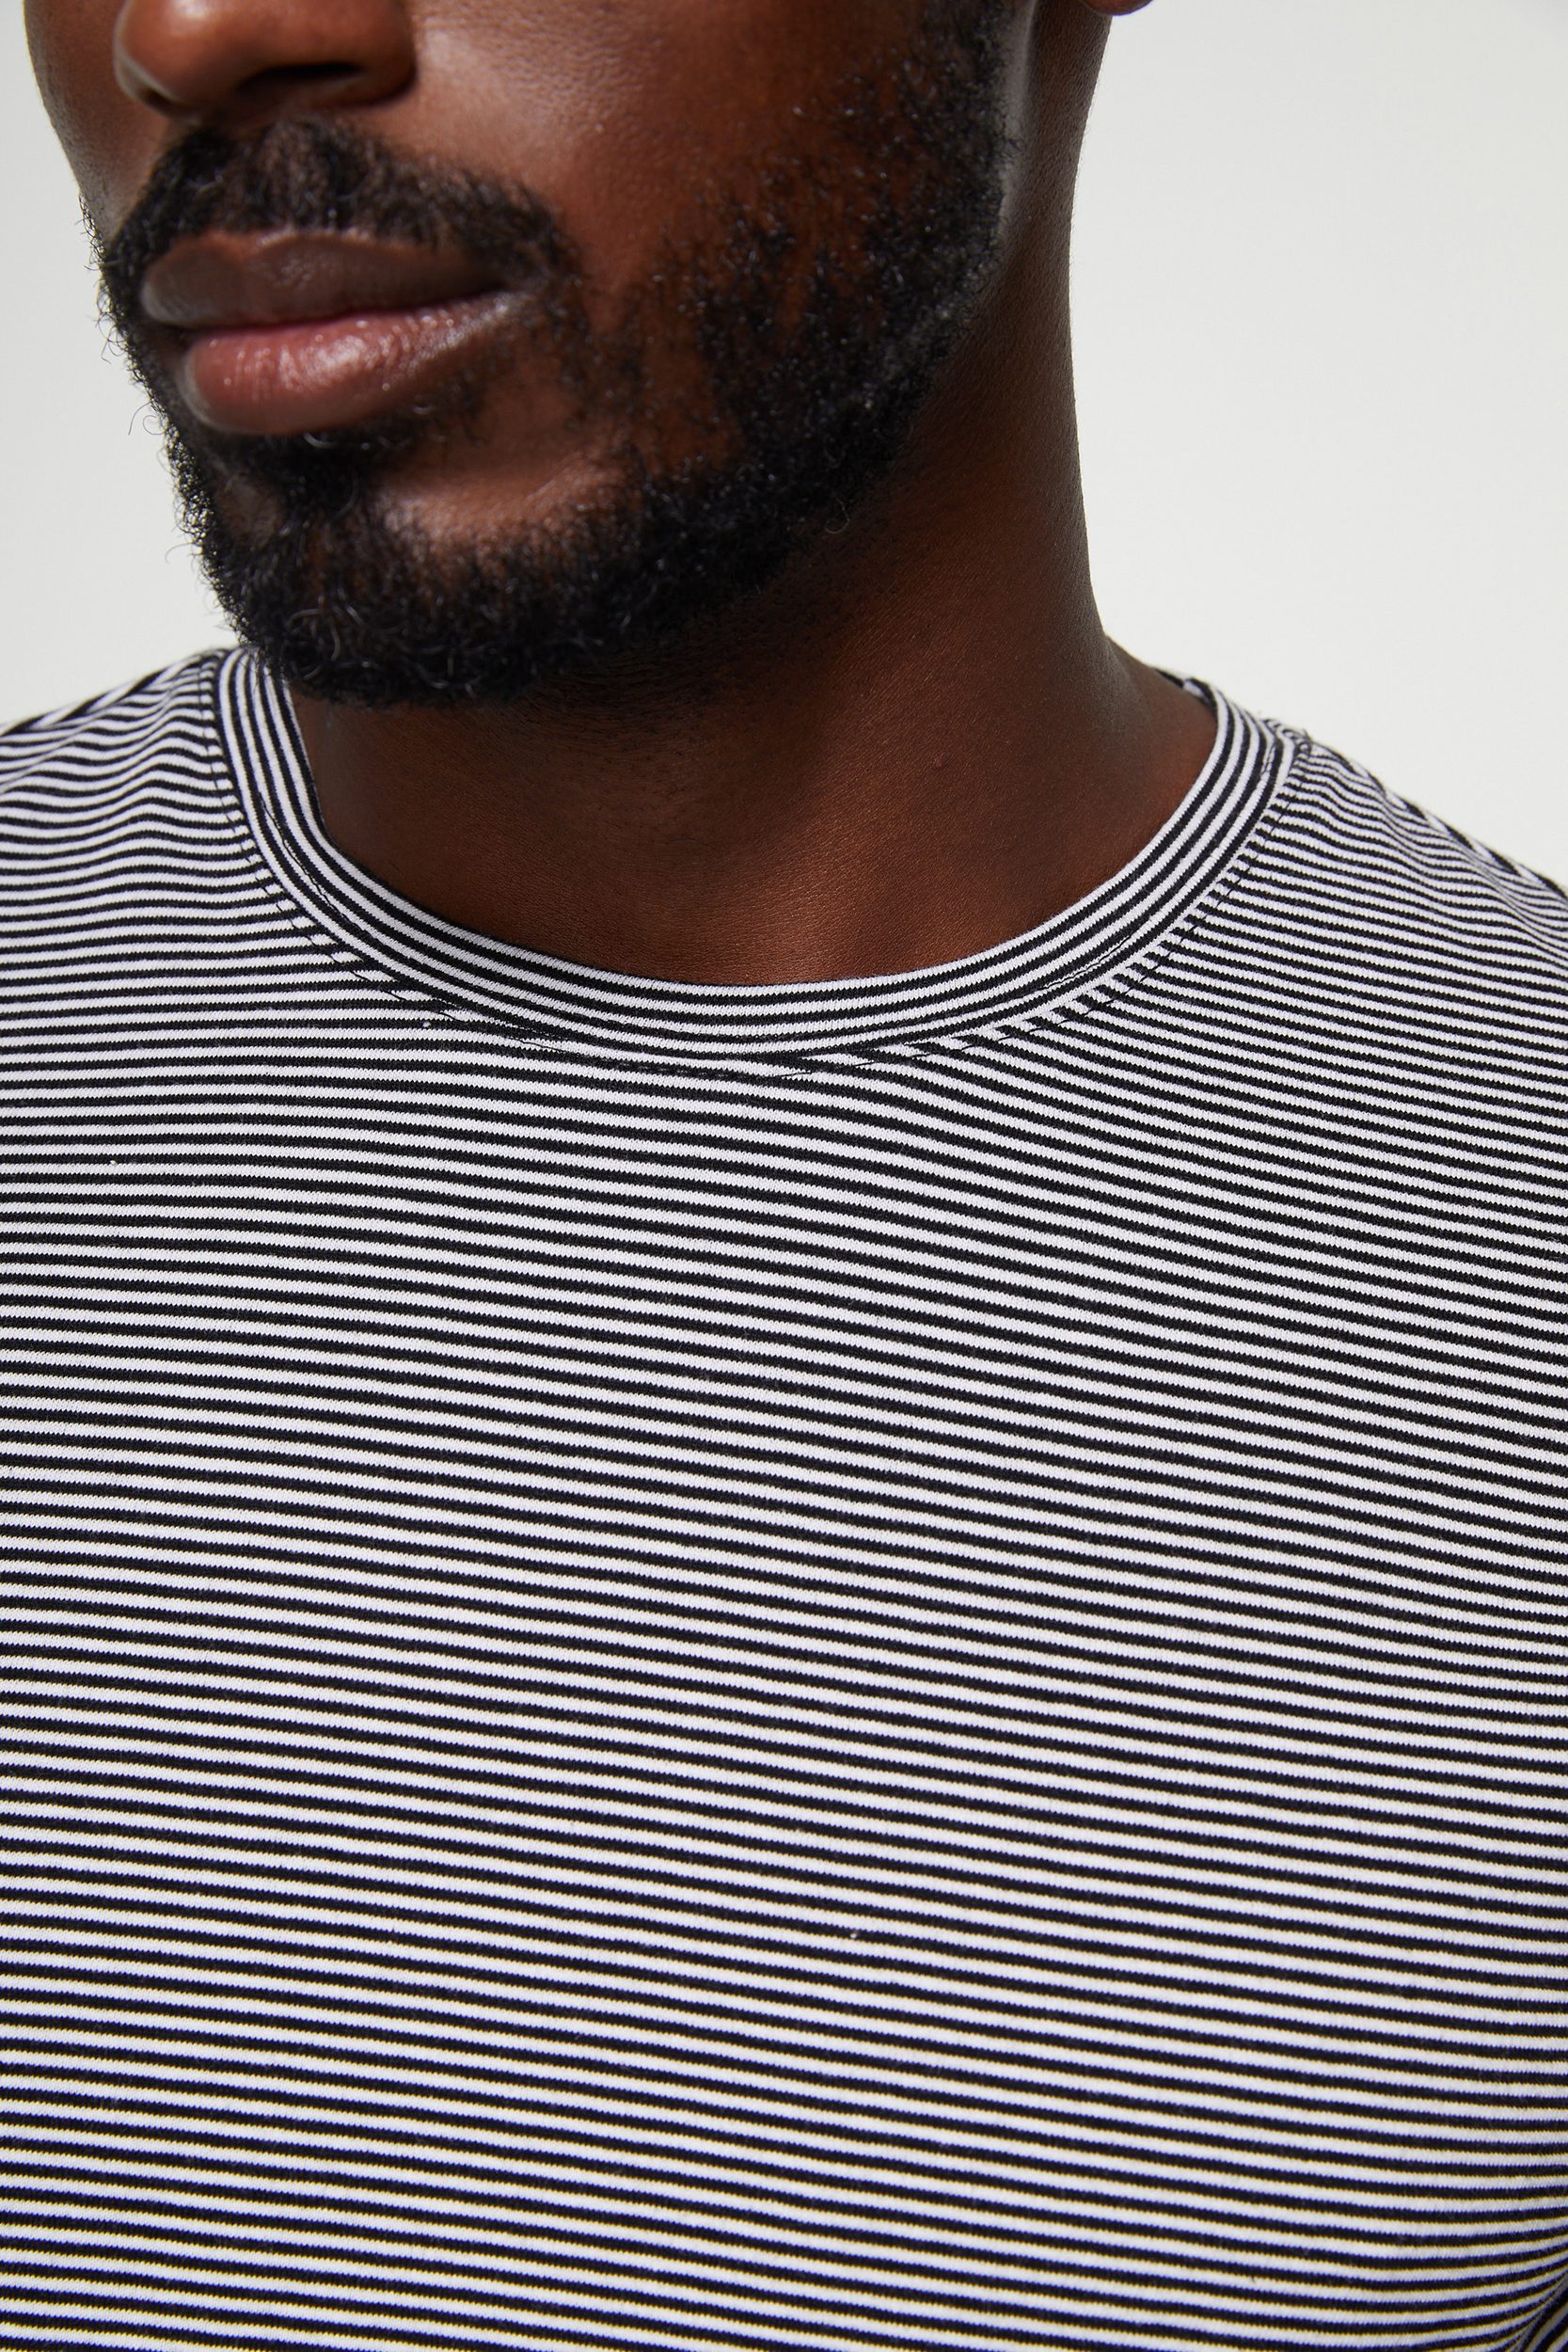 Striped T-shirt